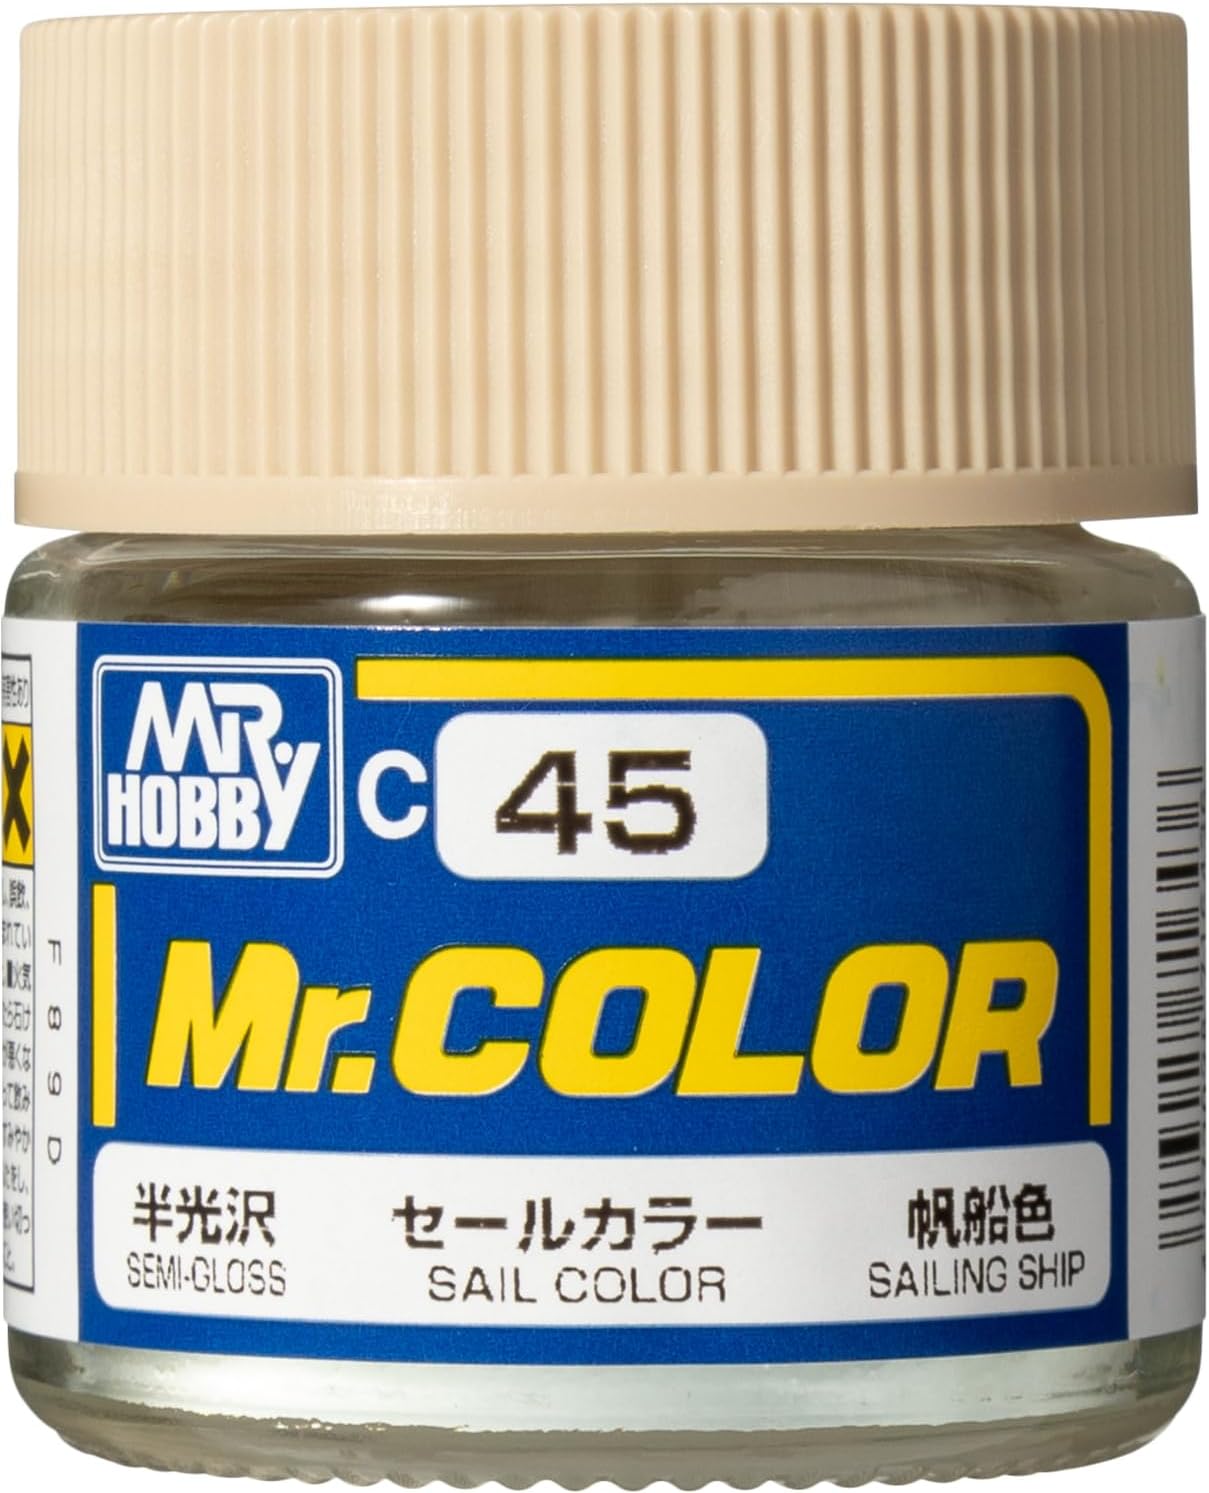 Mr. Hobby Mr. Color C45 Semi-Gloss Sail Color 10ml Bottle